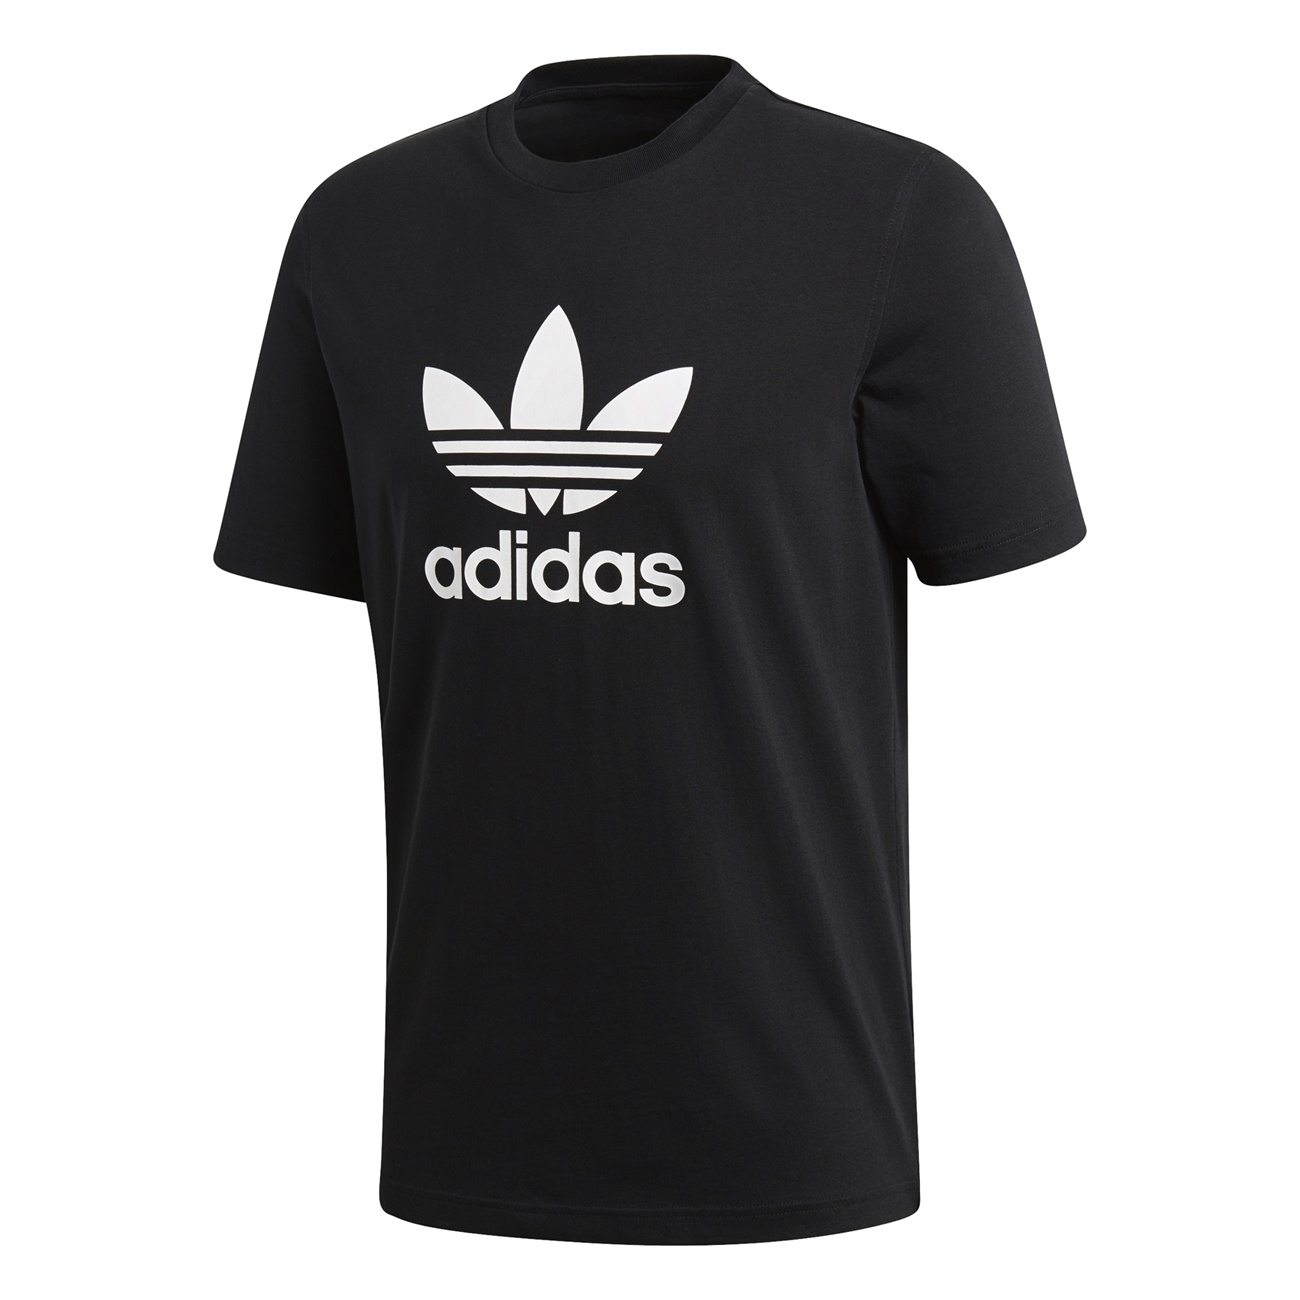 Adidas Originals Trefoil (Black) - manelsanchez.com